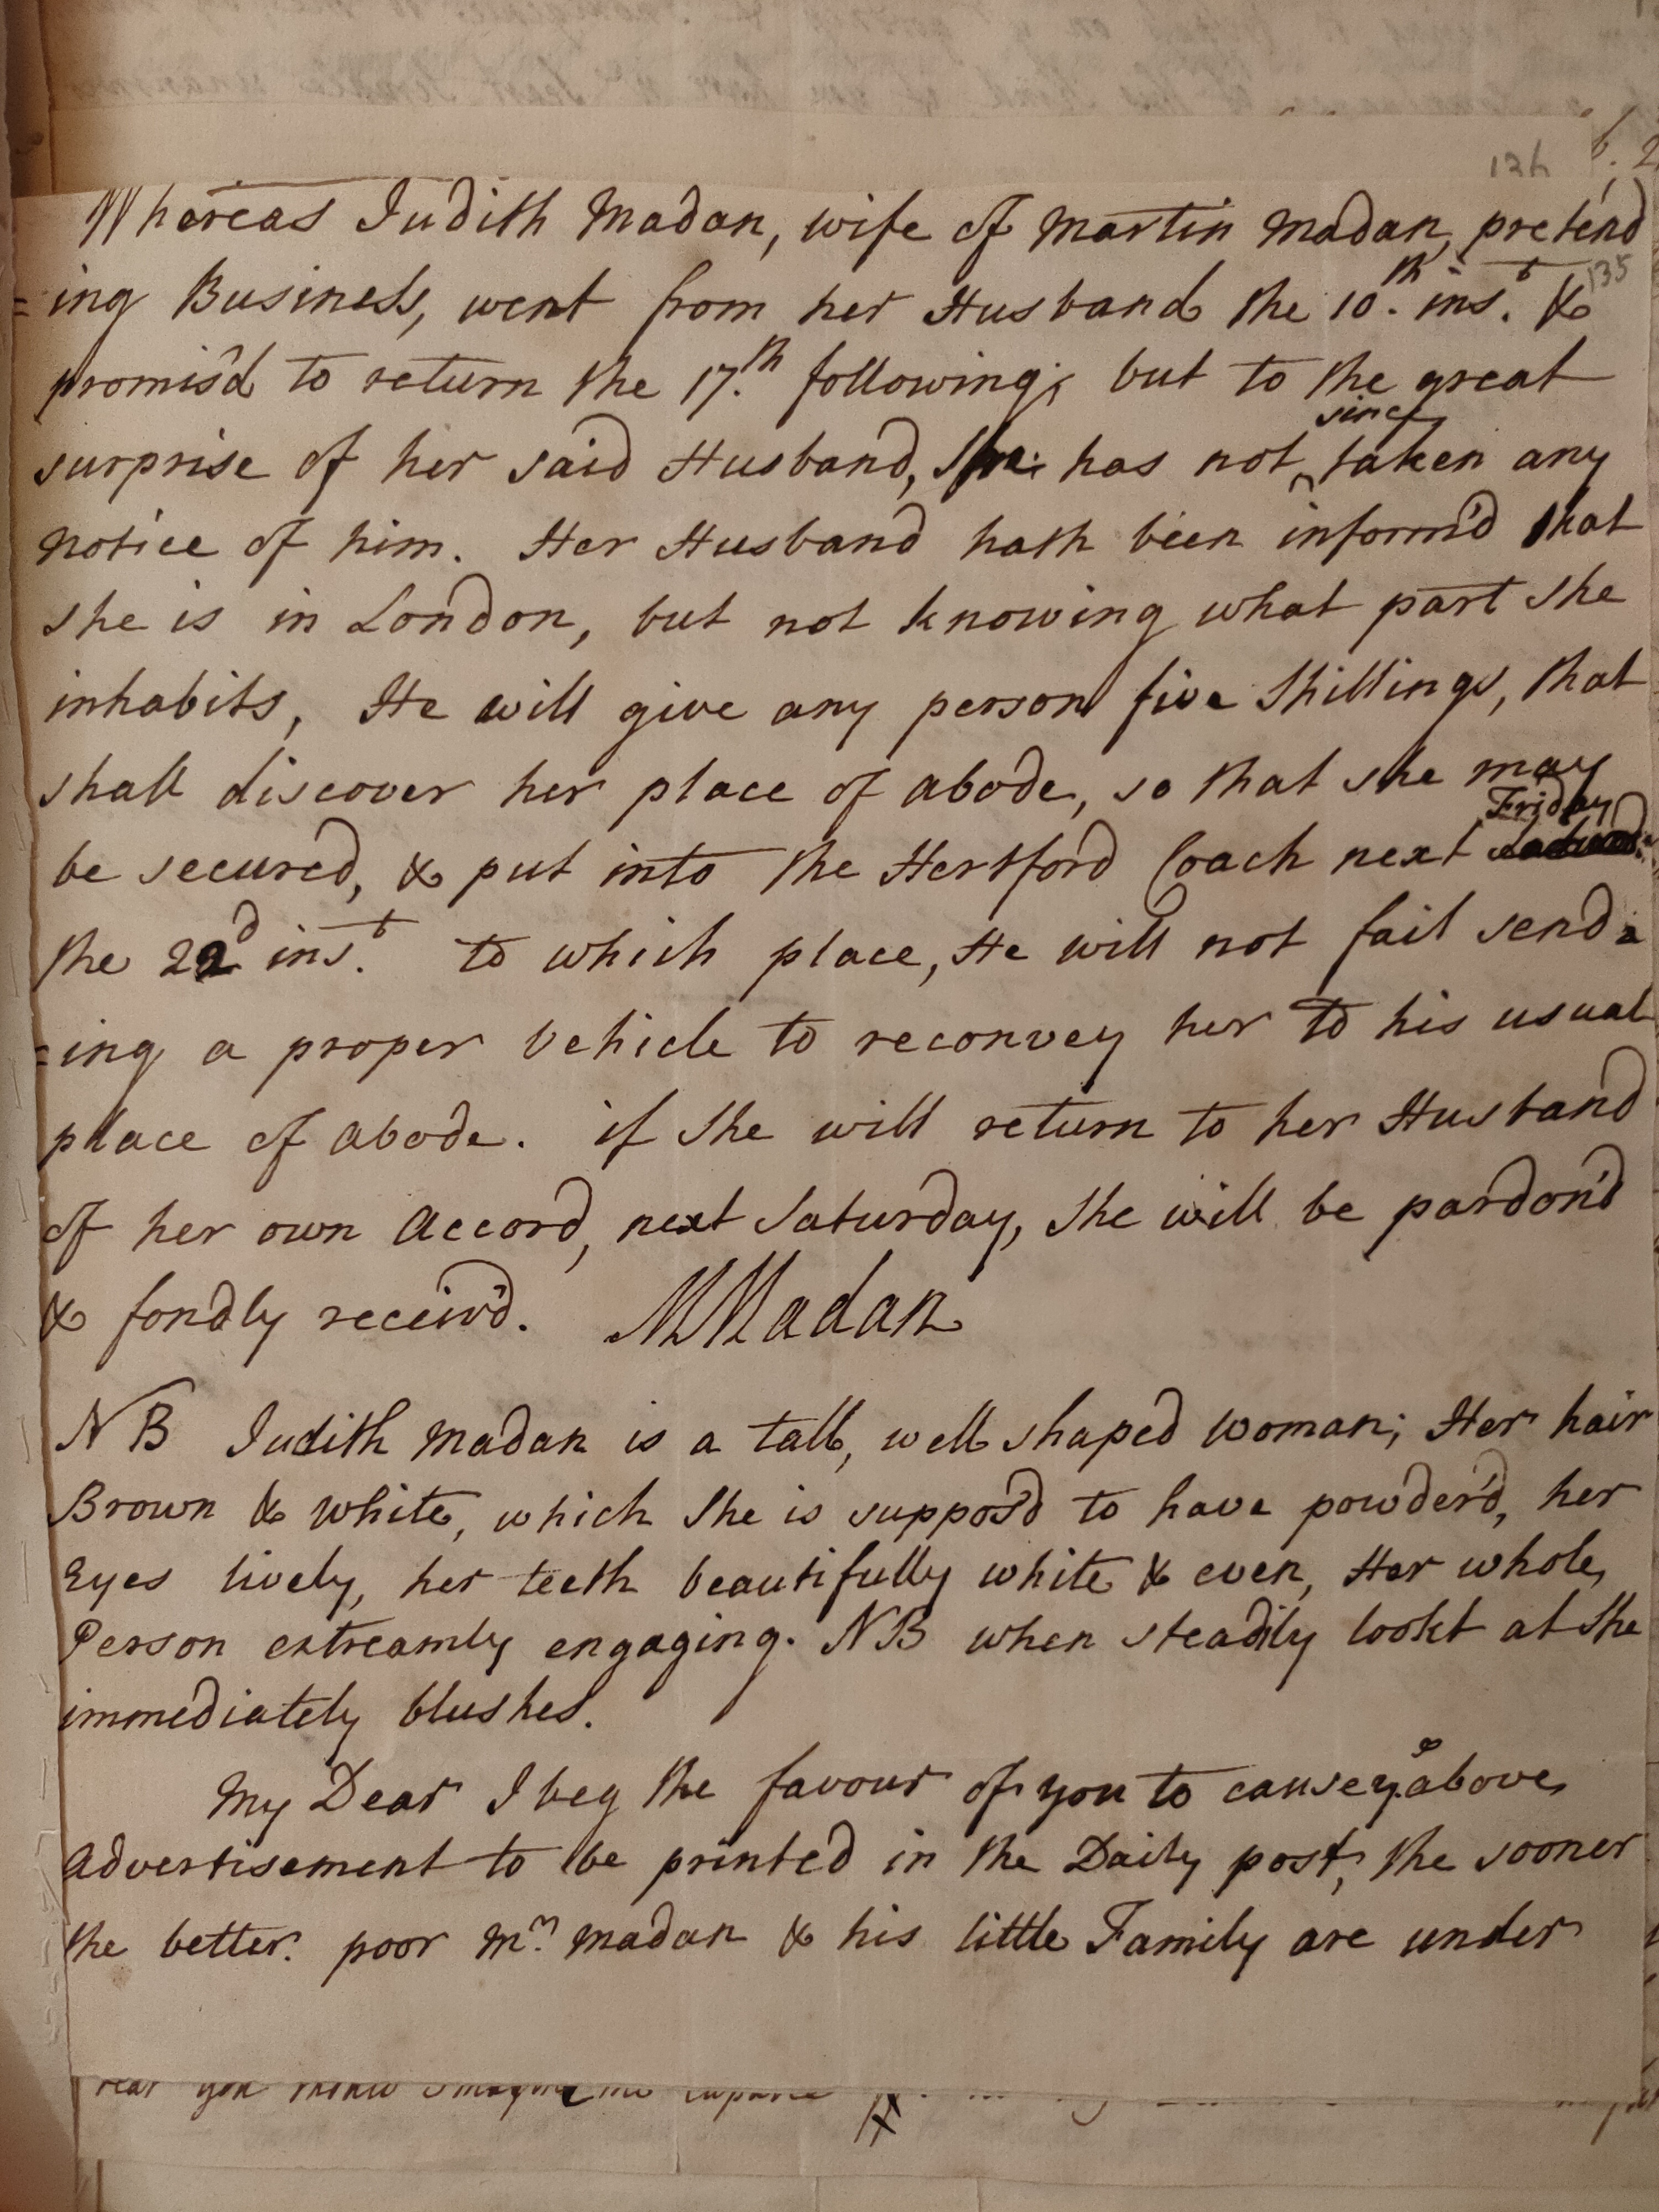 Image #1 of letter: Martin Madan to Judith Madan, 19 August 1735